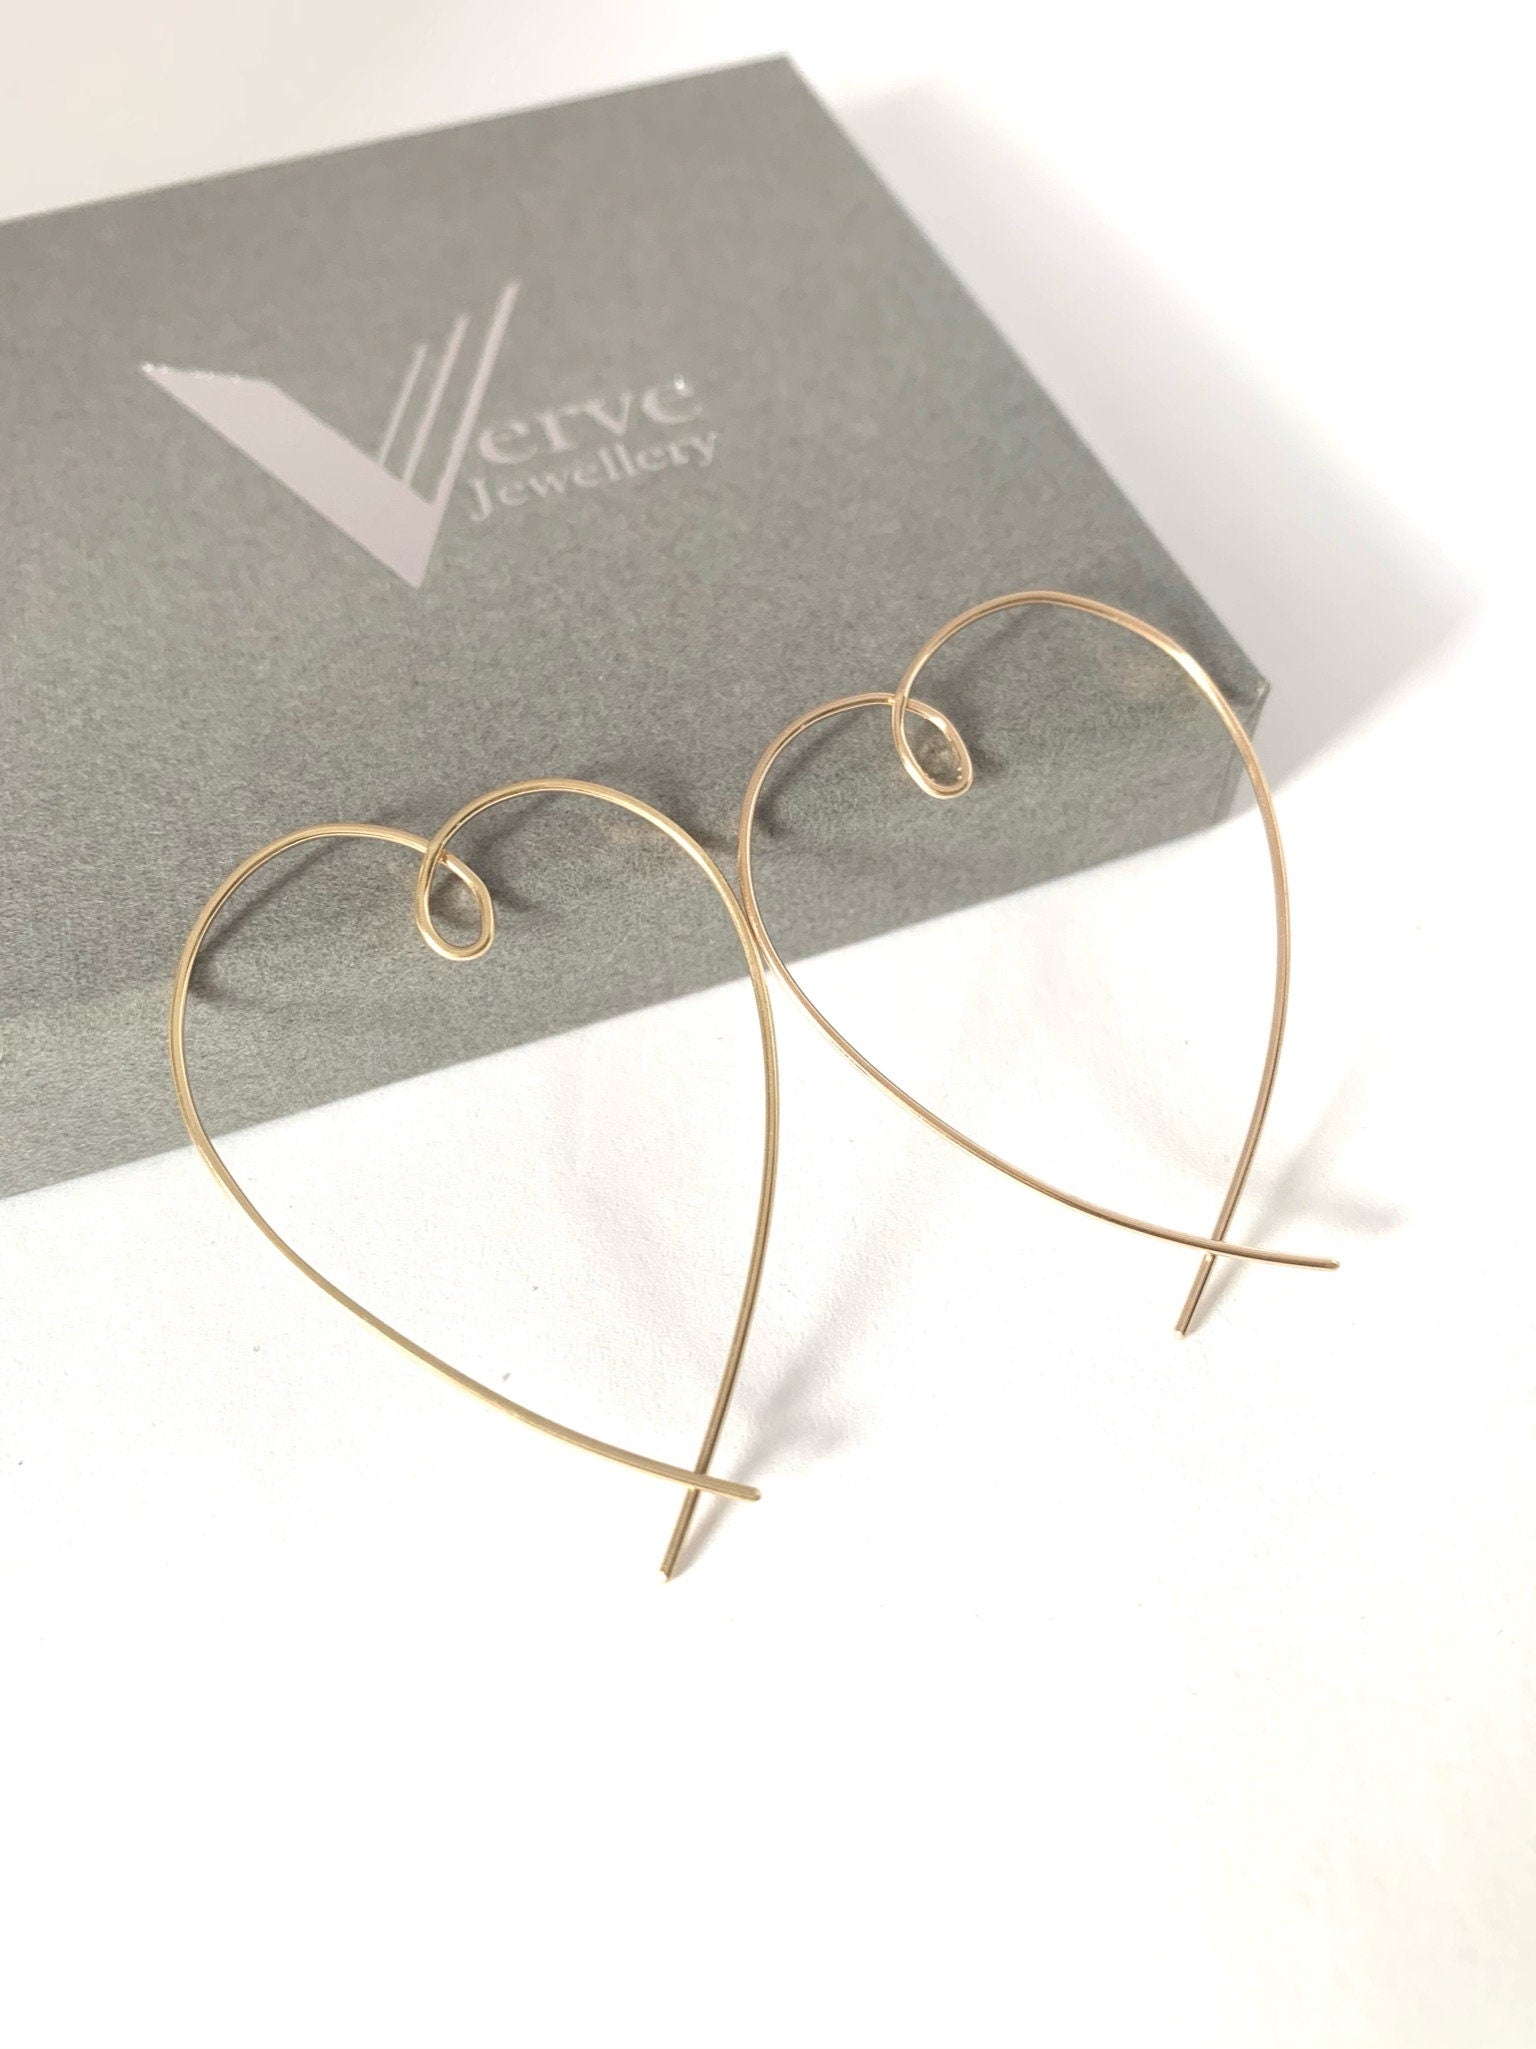 Gold heart threaders earrings